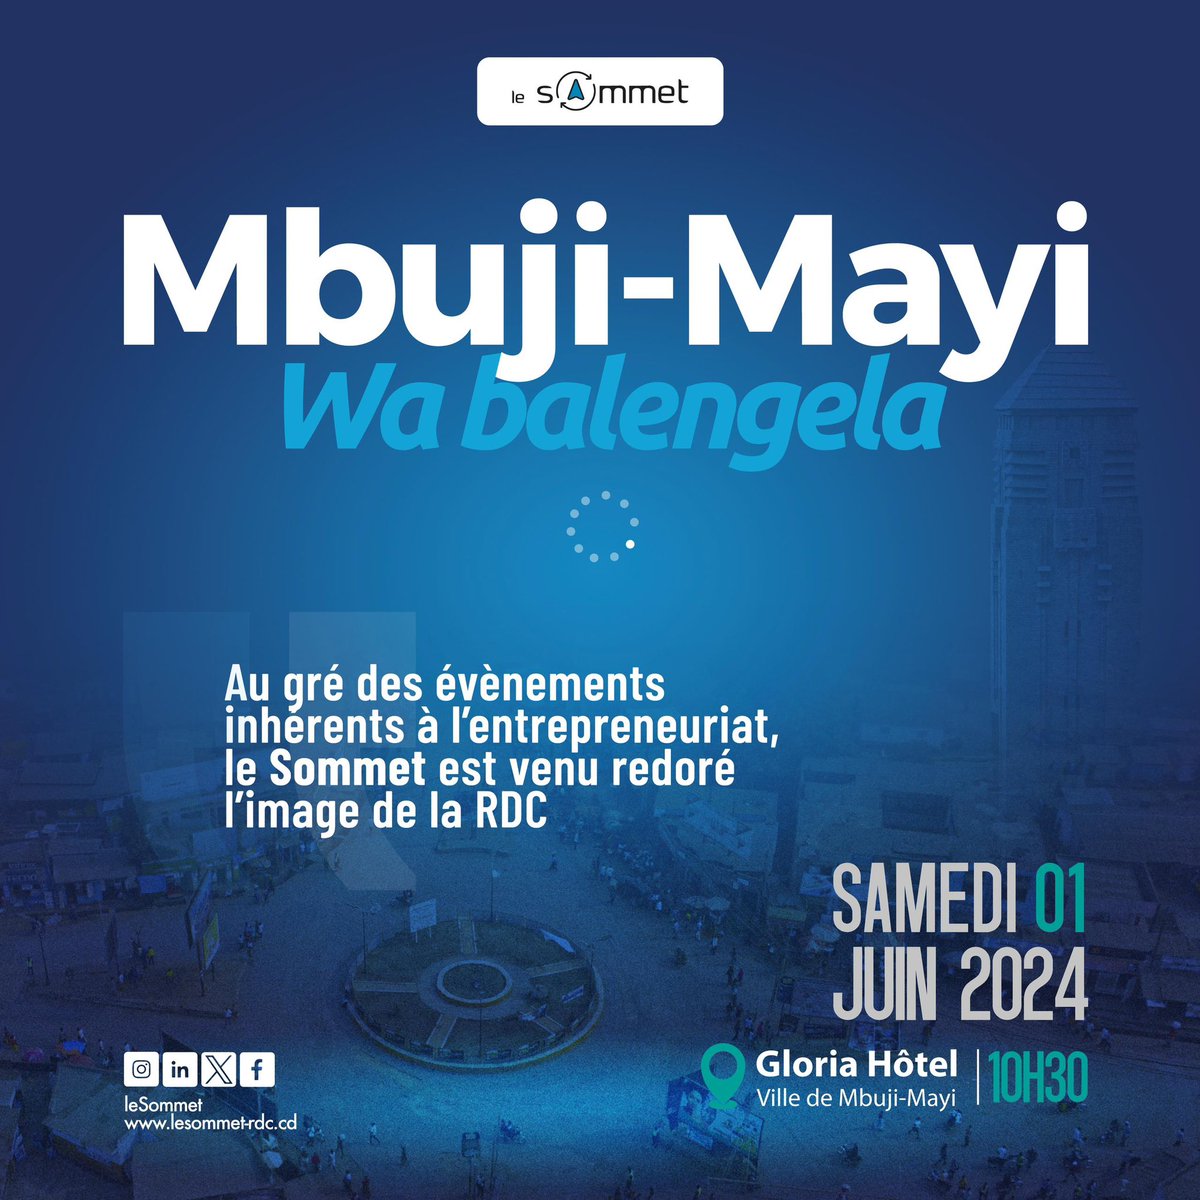 #RDC
#ENTREPRENEURIAT
#LESOMMET
 
Samedi 01 juin/2024 ,
 #mbuji_mayi  va célébrer la plus grande messe des entrepreneurs.